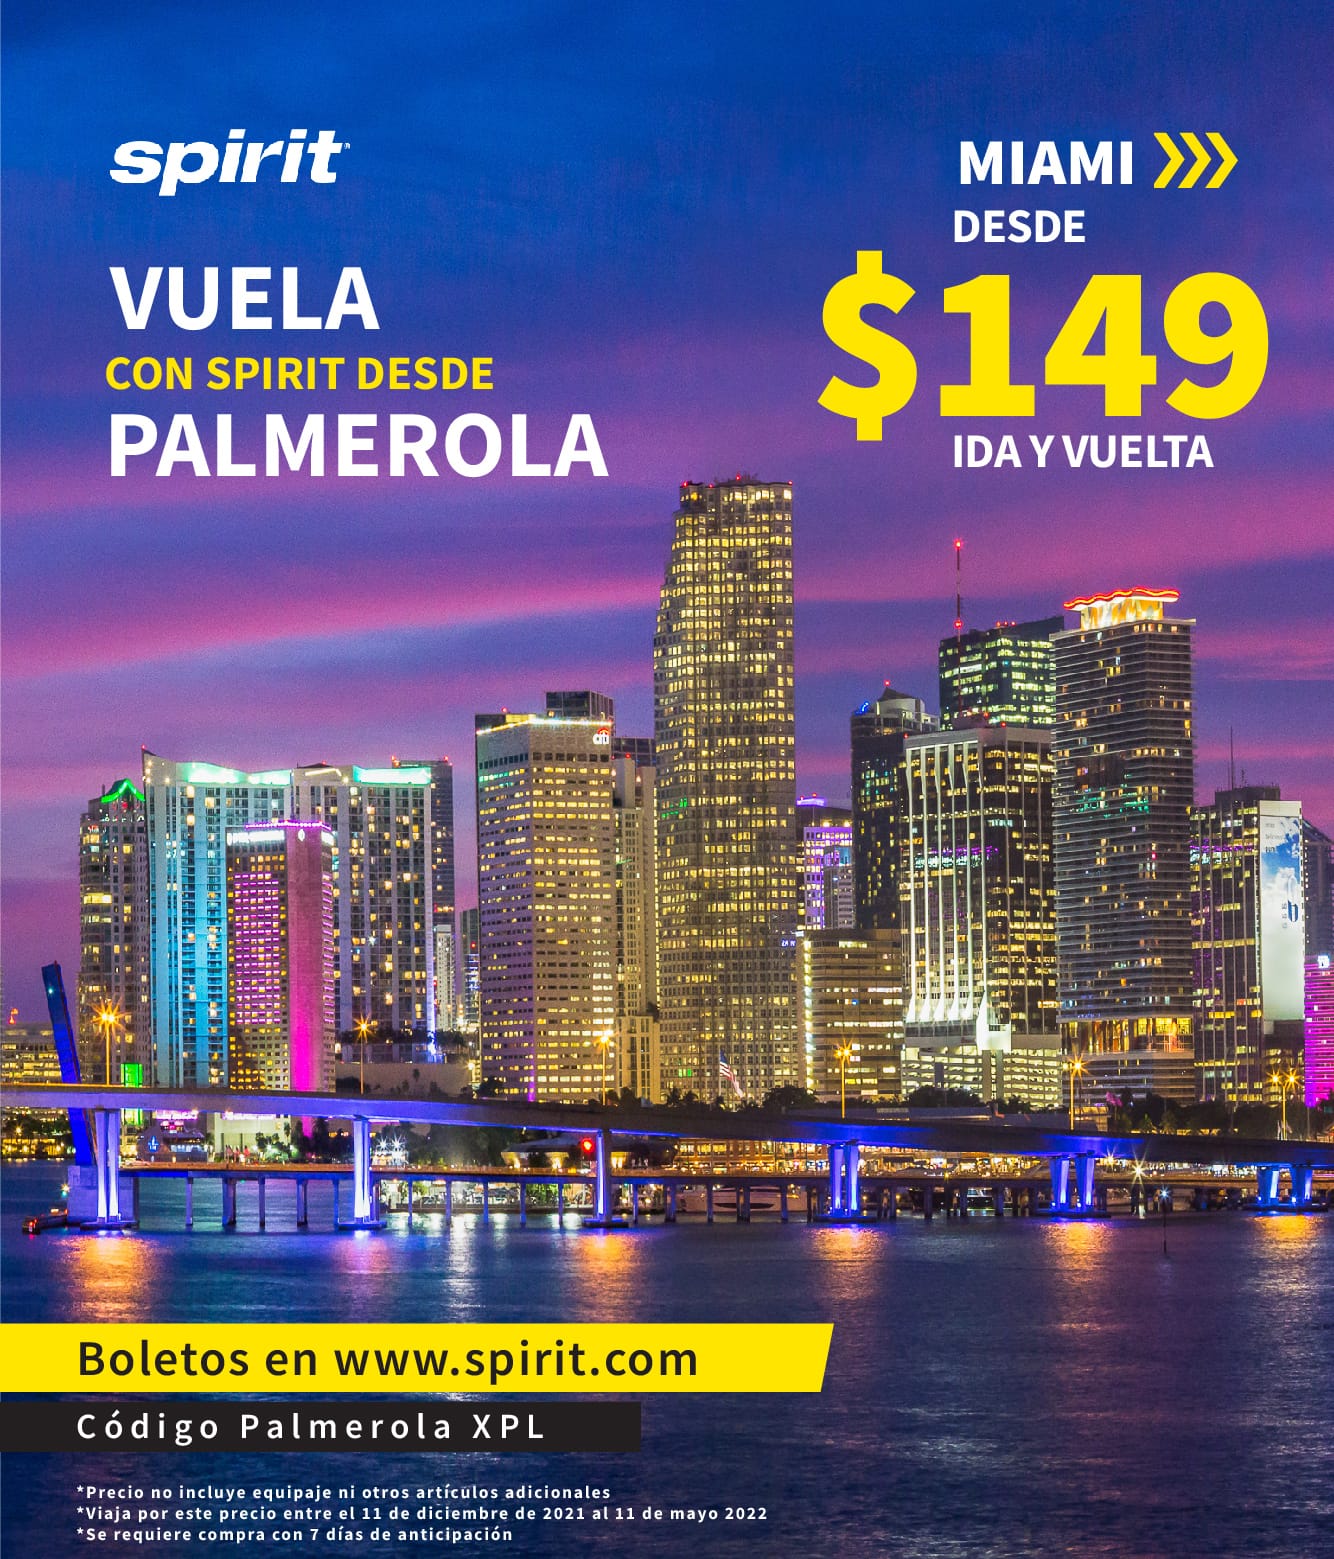 Aeropuerto Toncontin Twitter: "¡Vuelos a $149 ida vuelta a Miami y Houston!! 🎉 Para celebrar el de vuelos en Palmerola, Spirit lanza súper promoción. en https://t.co/V53neViuXS buscando código